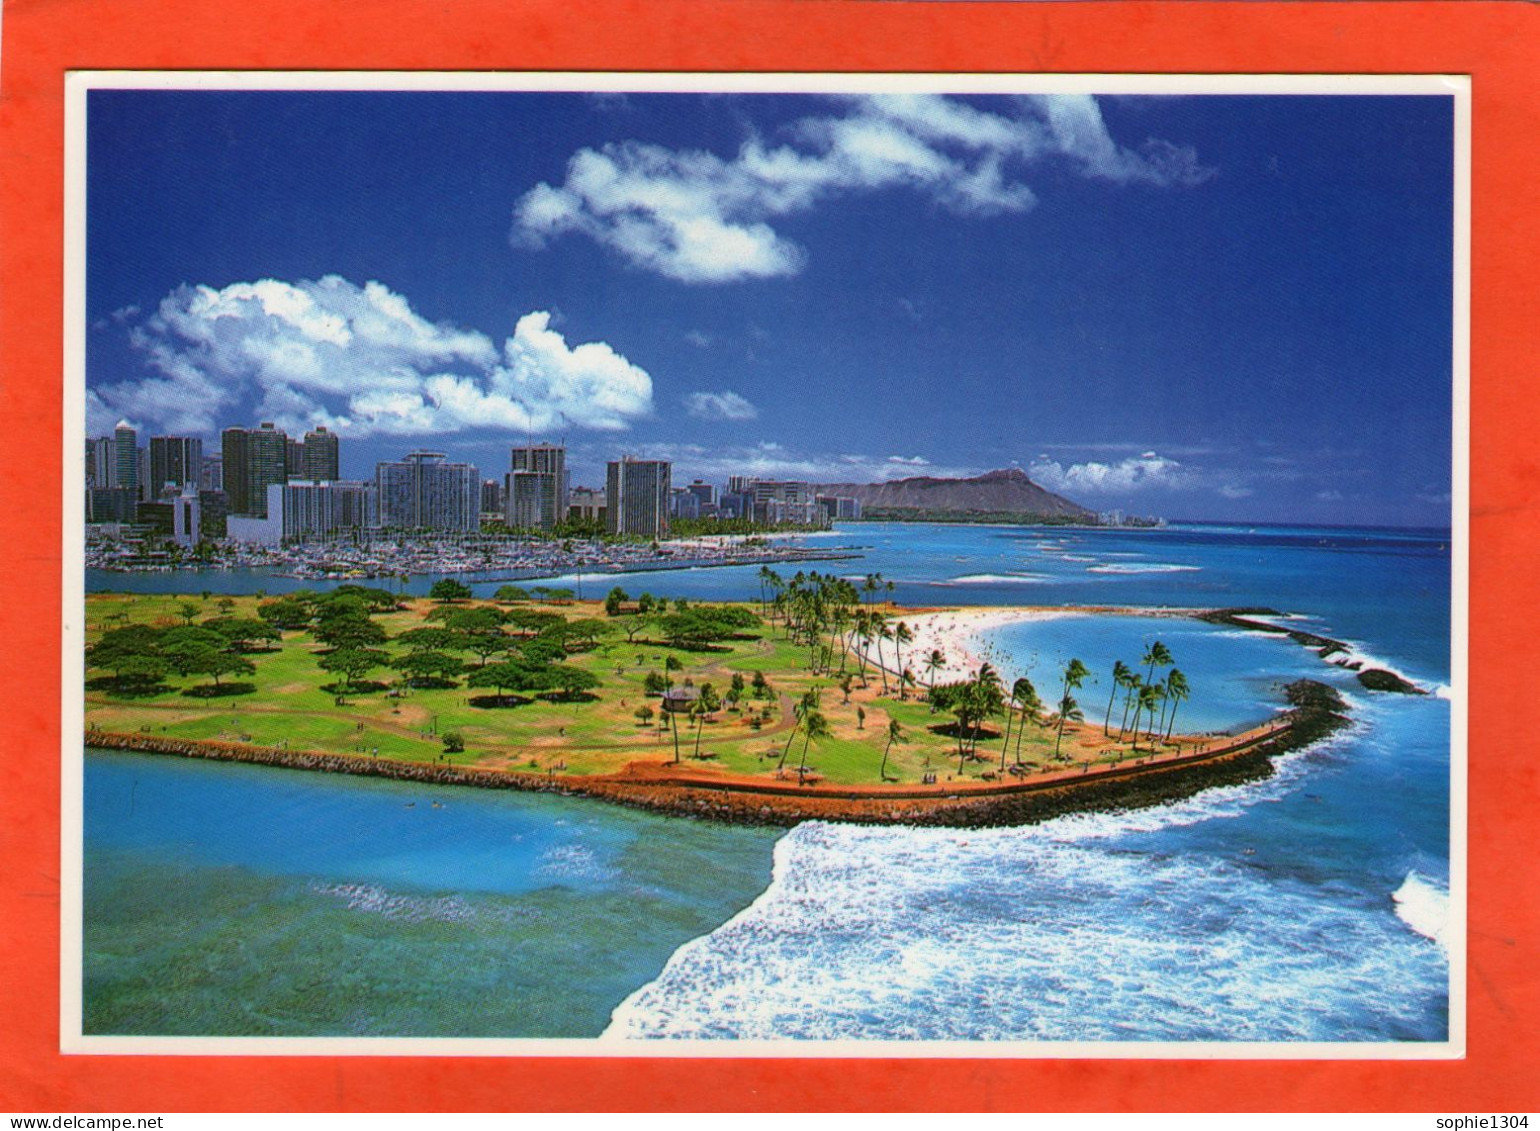 An Aerial View Of HONOLULU WAIKIKI And Magic Island  With Diamond Head - Honolulu